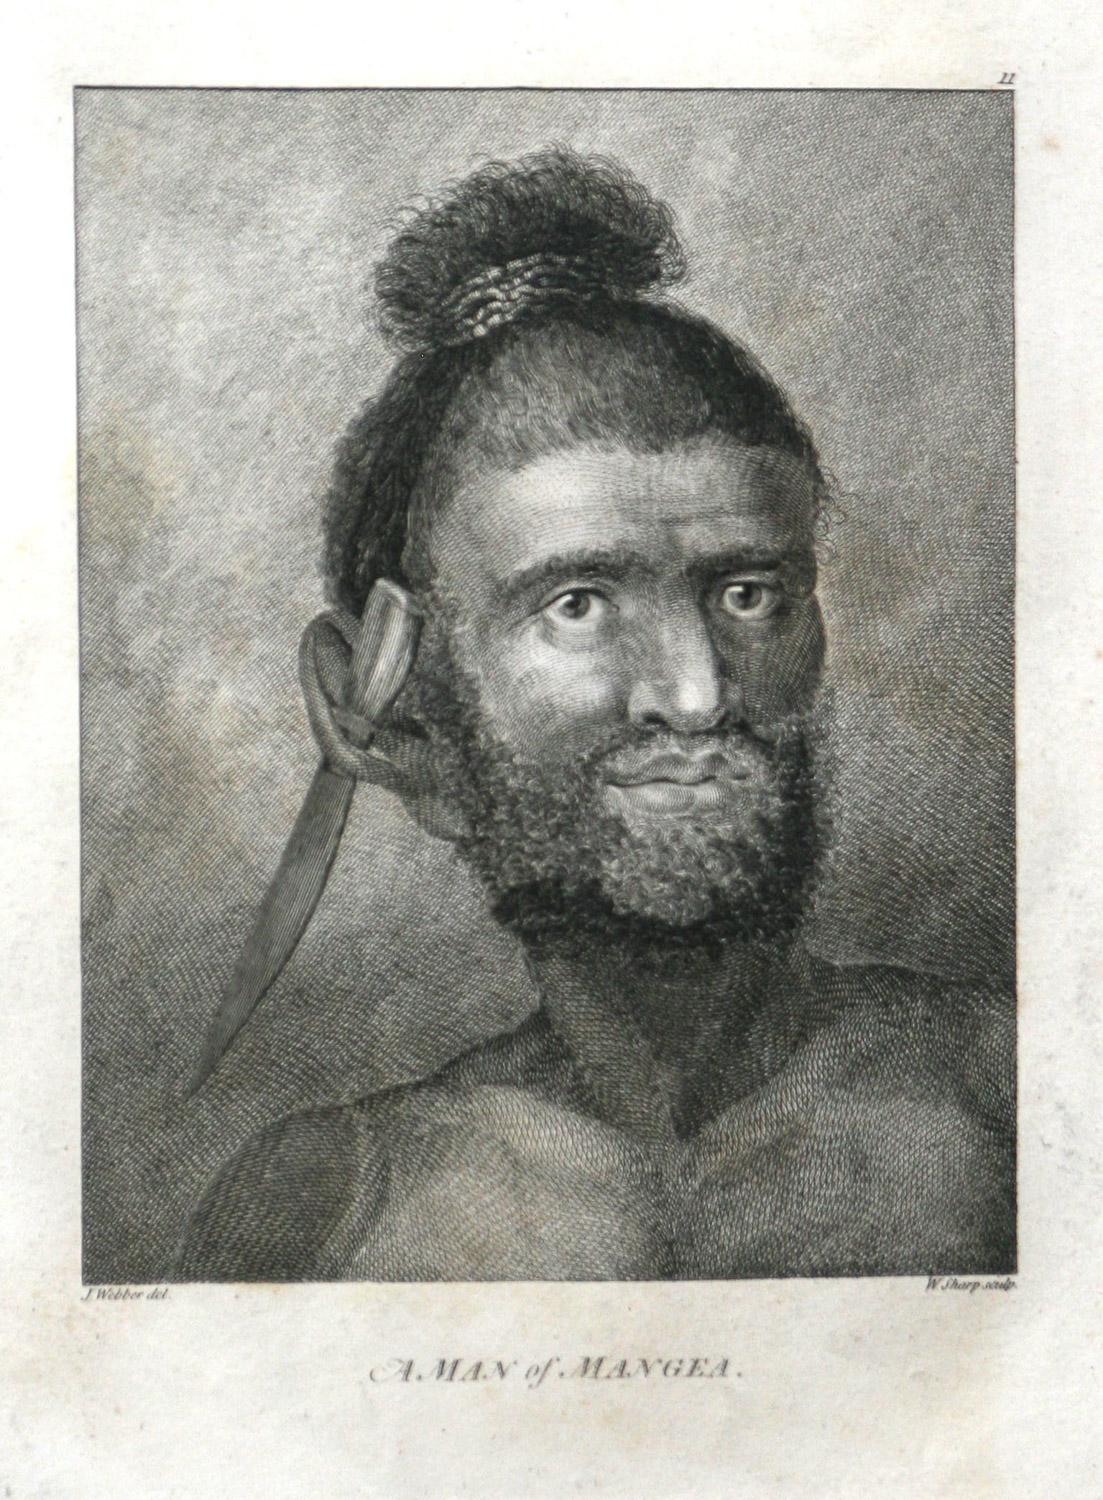 A Man of Mangea 1784 final voyage of Captain Cook by John Webber